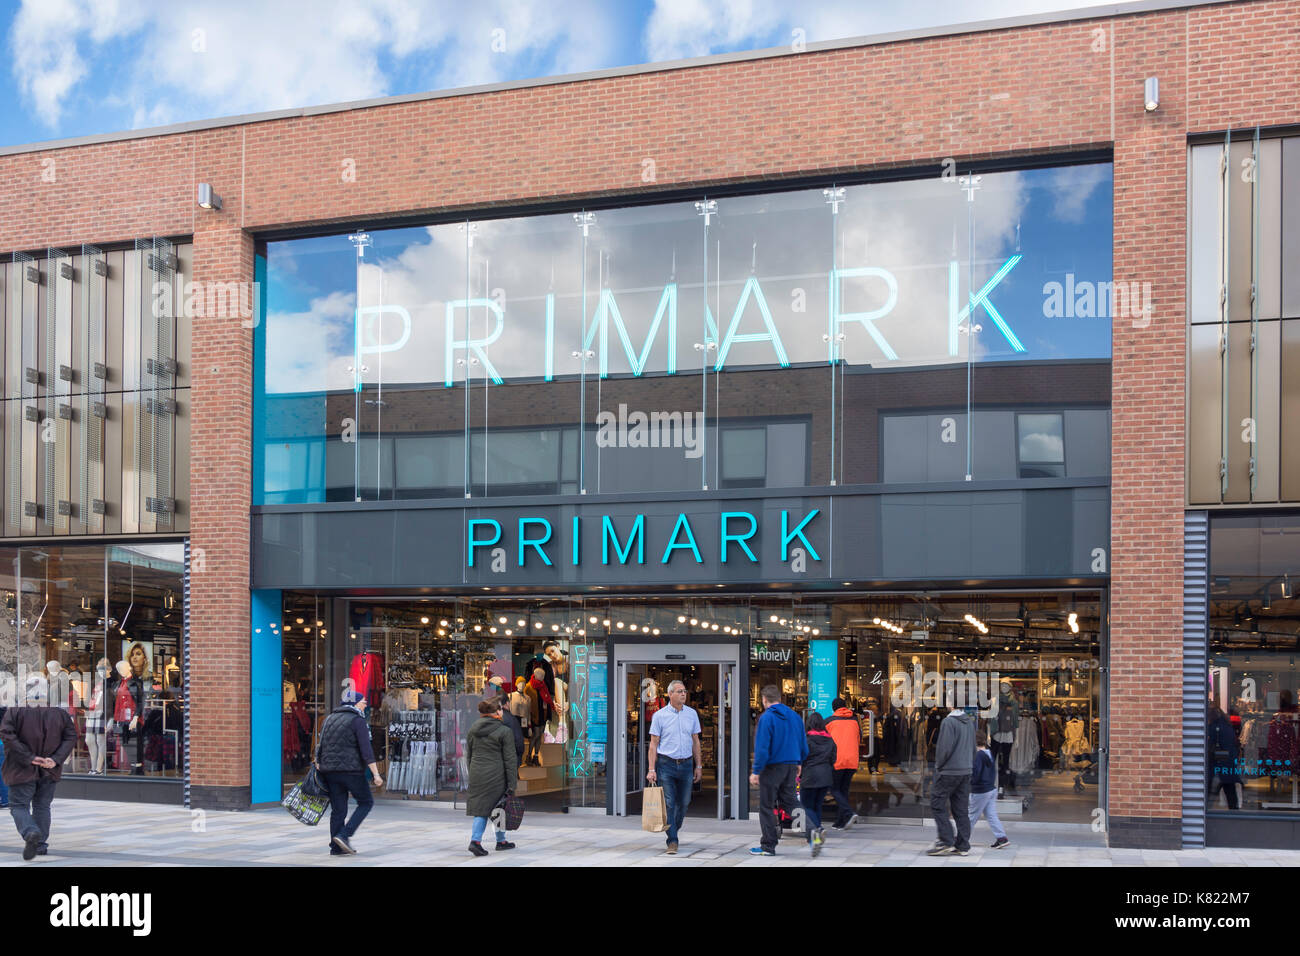 Primark store entrance, Union Square, The Lexicon, Bracknell, Berkshire, England, United Kingdom Stock Photo